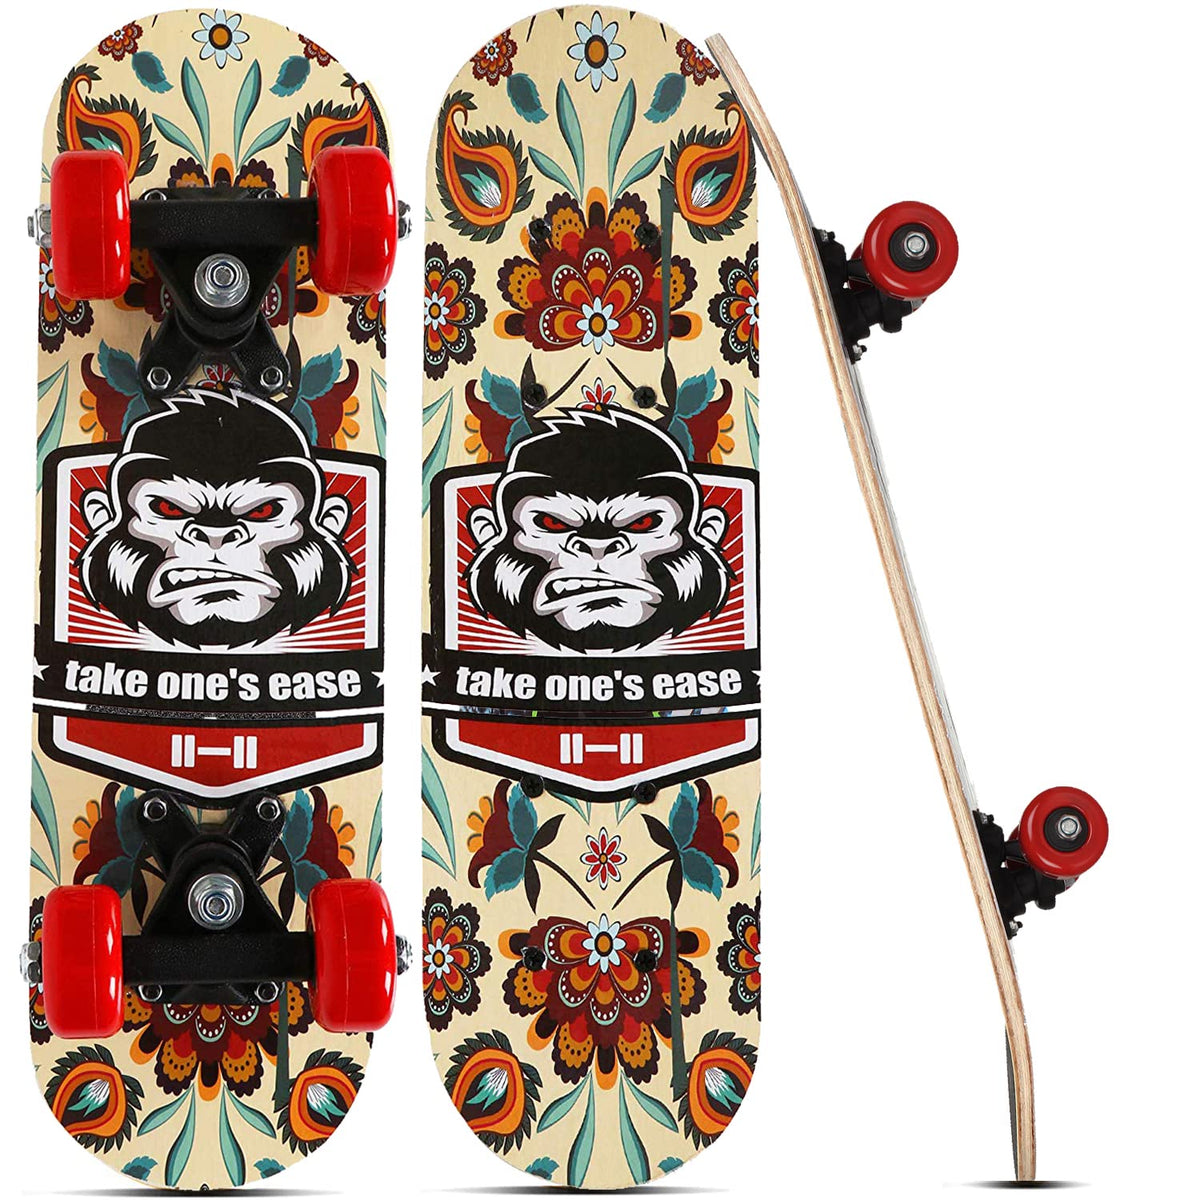 Strauss Kids Skateboard (Chimps) | 43 CM Maple Wood Skateboard for Kids Upto 5 Years | Recommended for Boys and Girls | Beginner